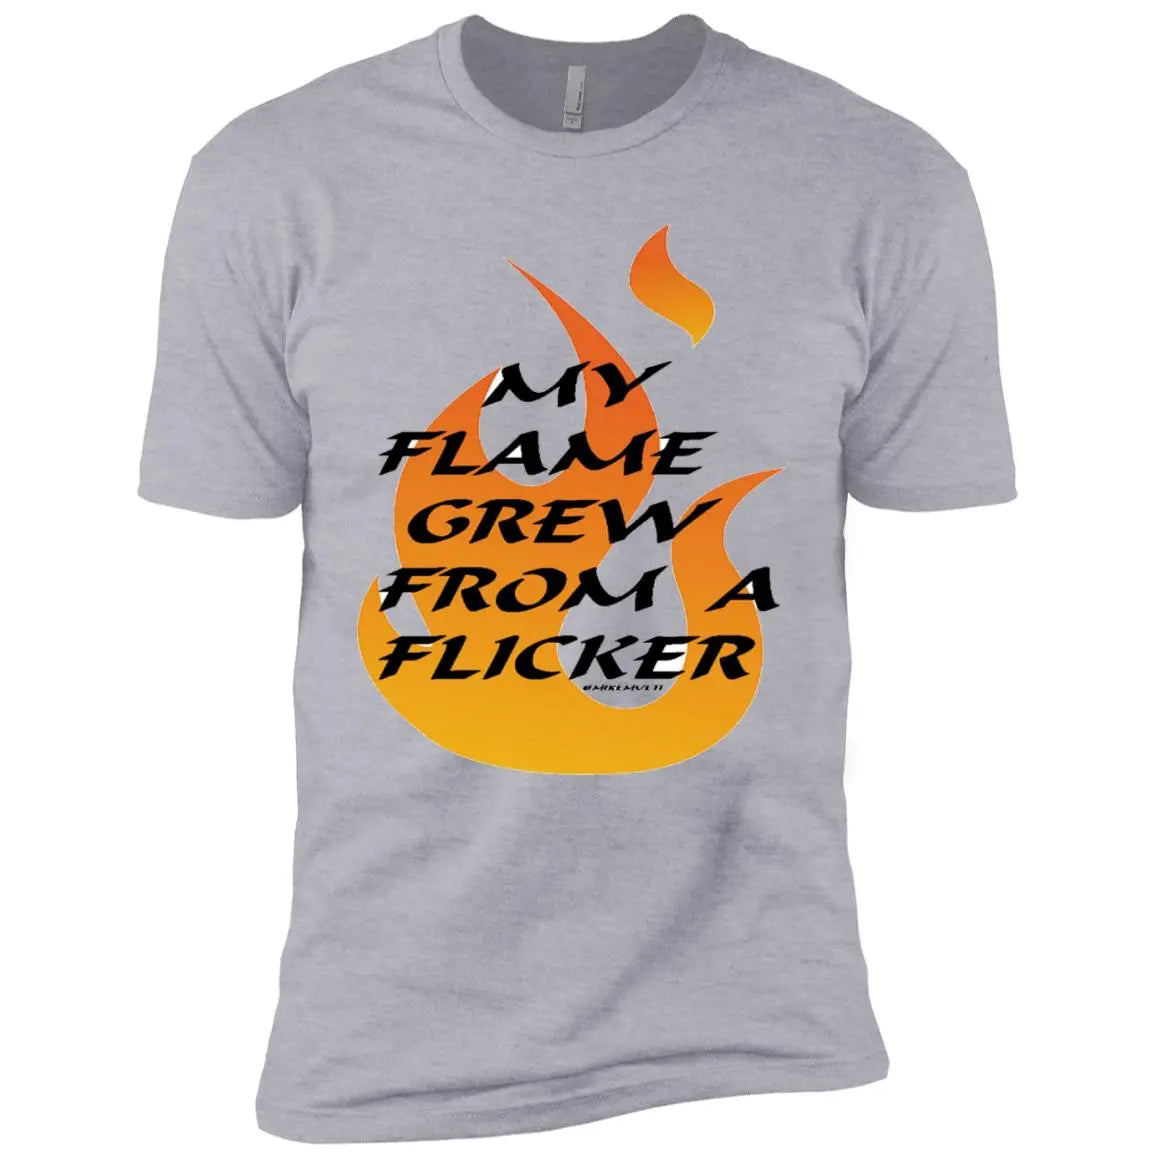 Flame From Flicker - Boys' Cotton T-Shirt CustomCat